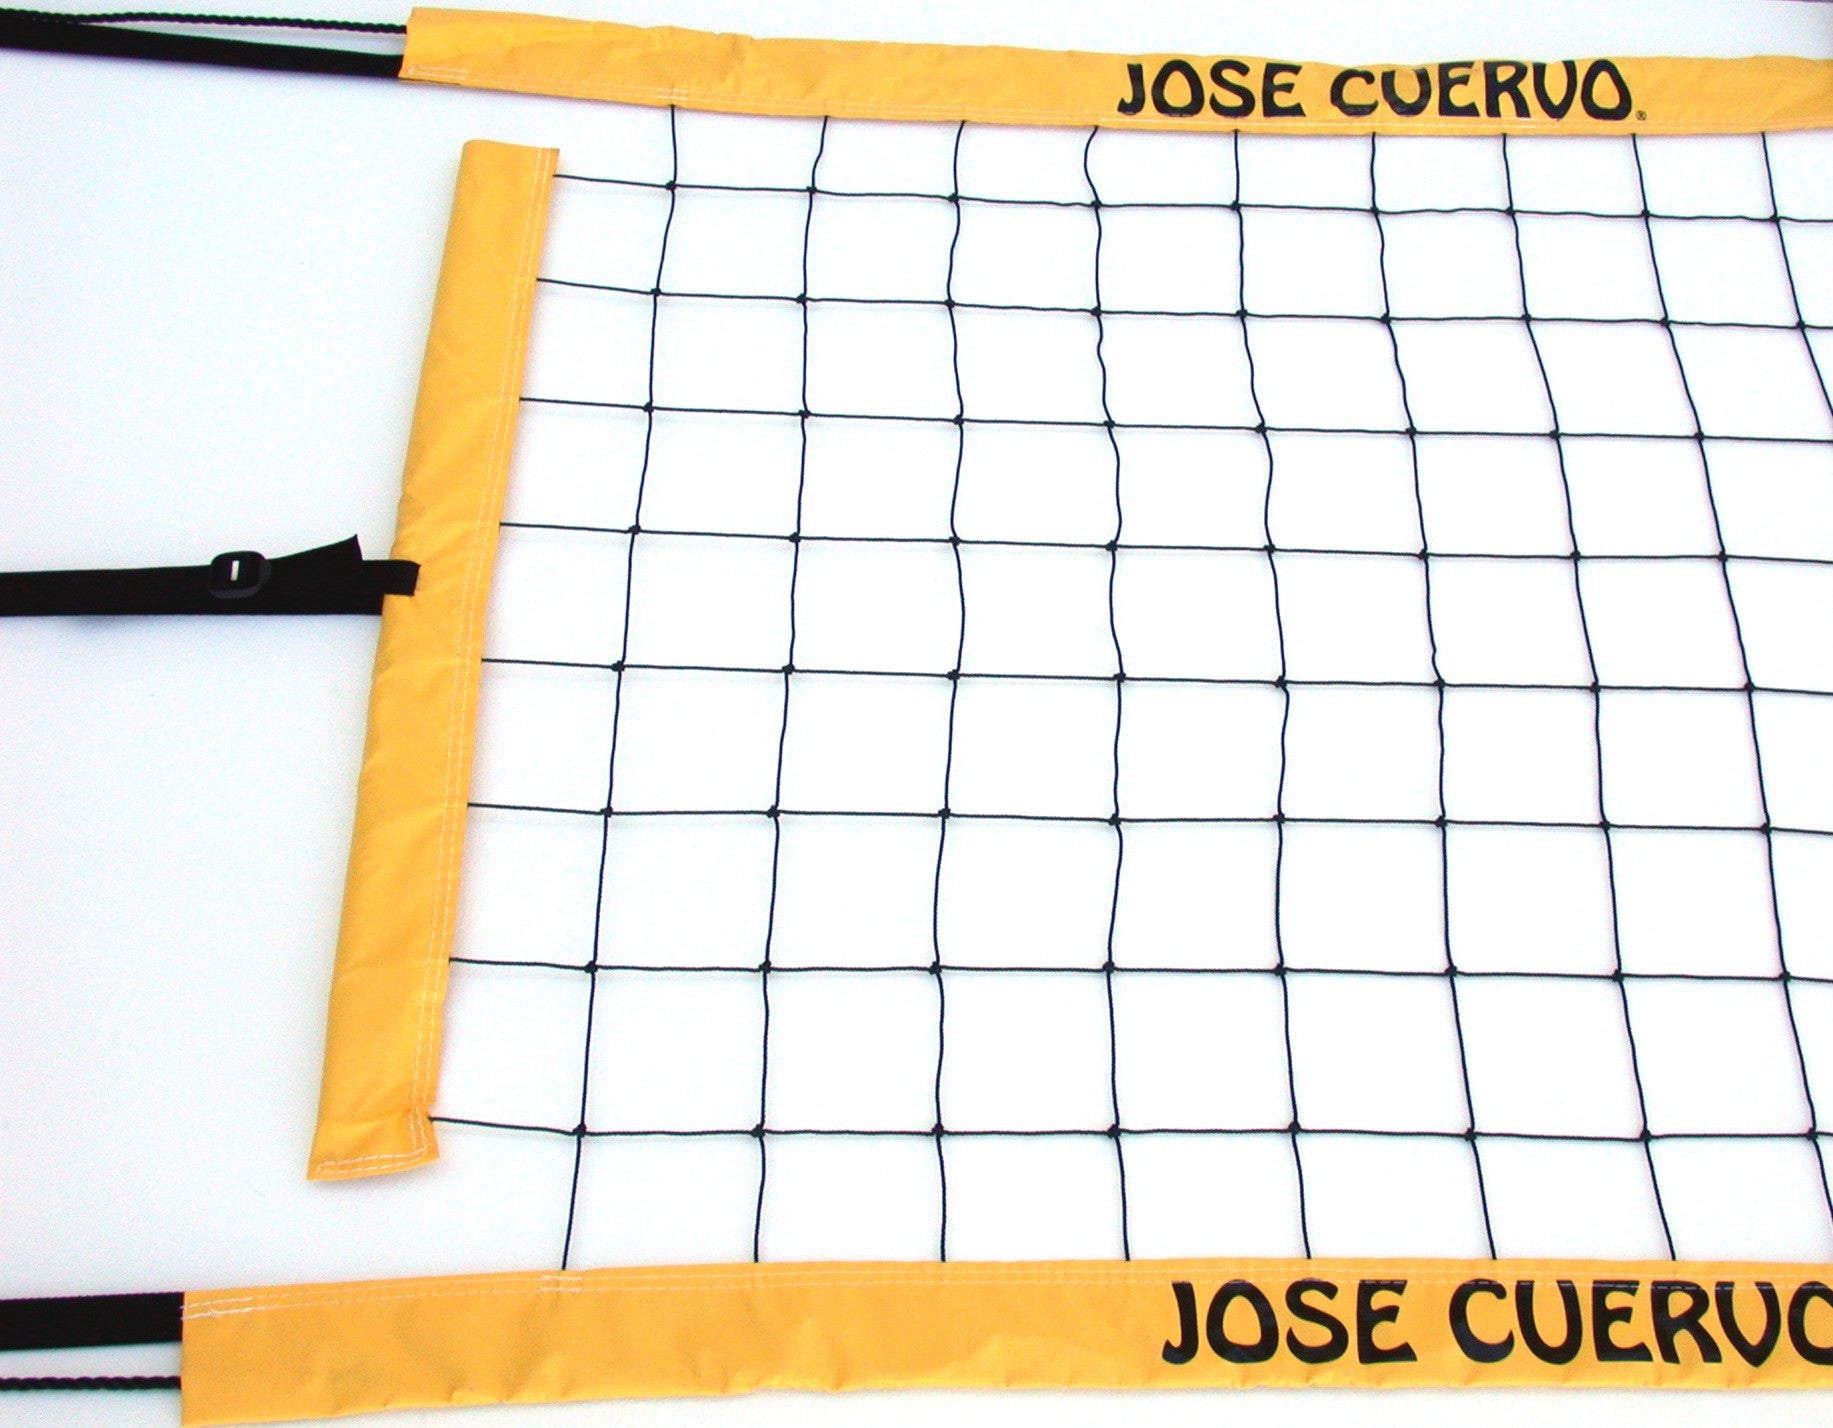 JCPNR-Jose Cuervo logo Power Volleyball Suspension Net Twisted Rope Yellow Vinyl